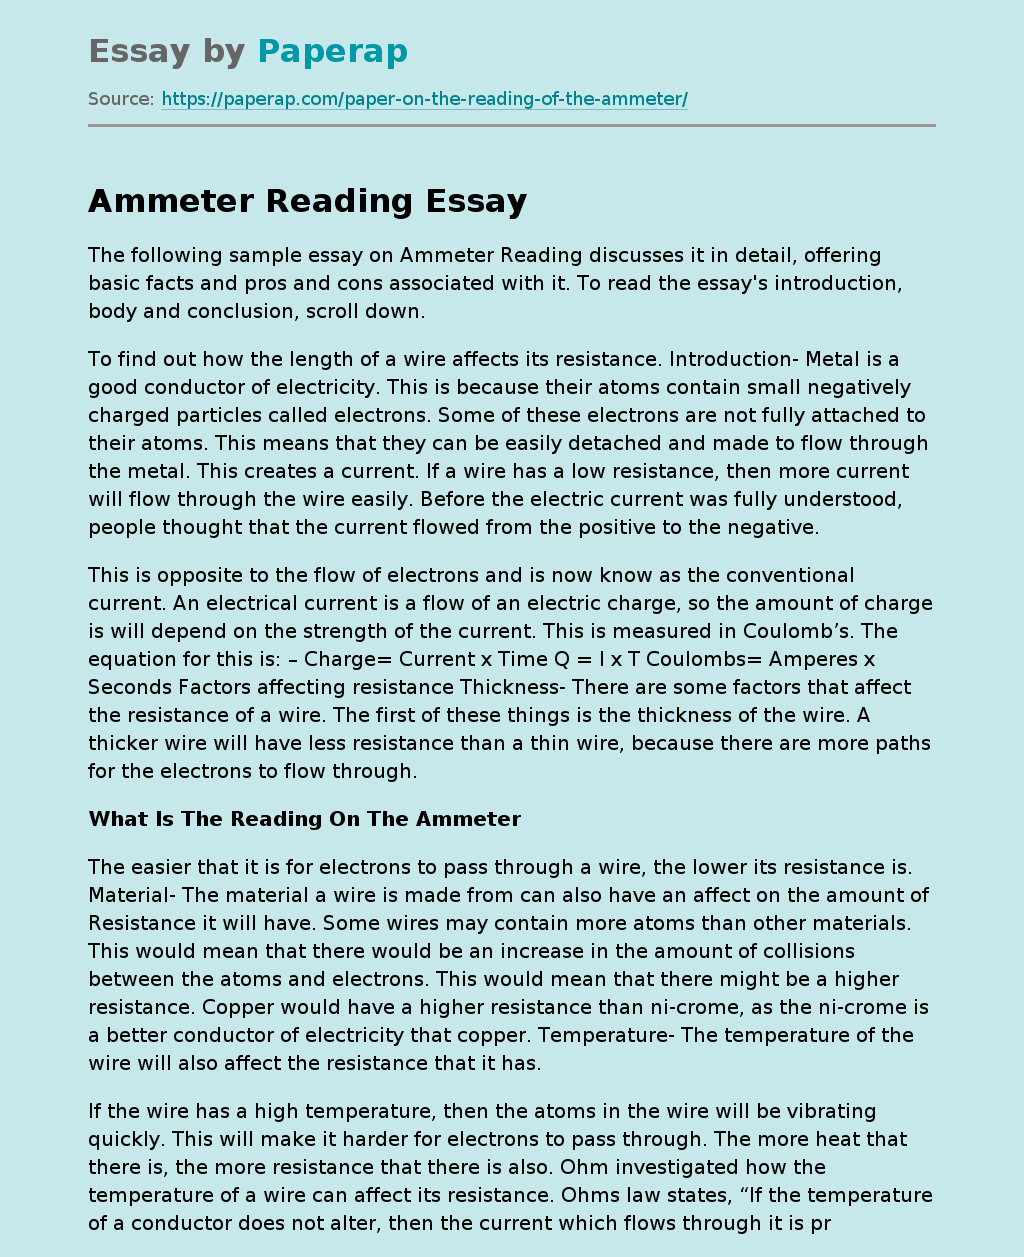 Ammeter Reading